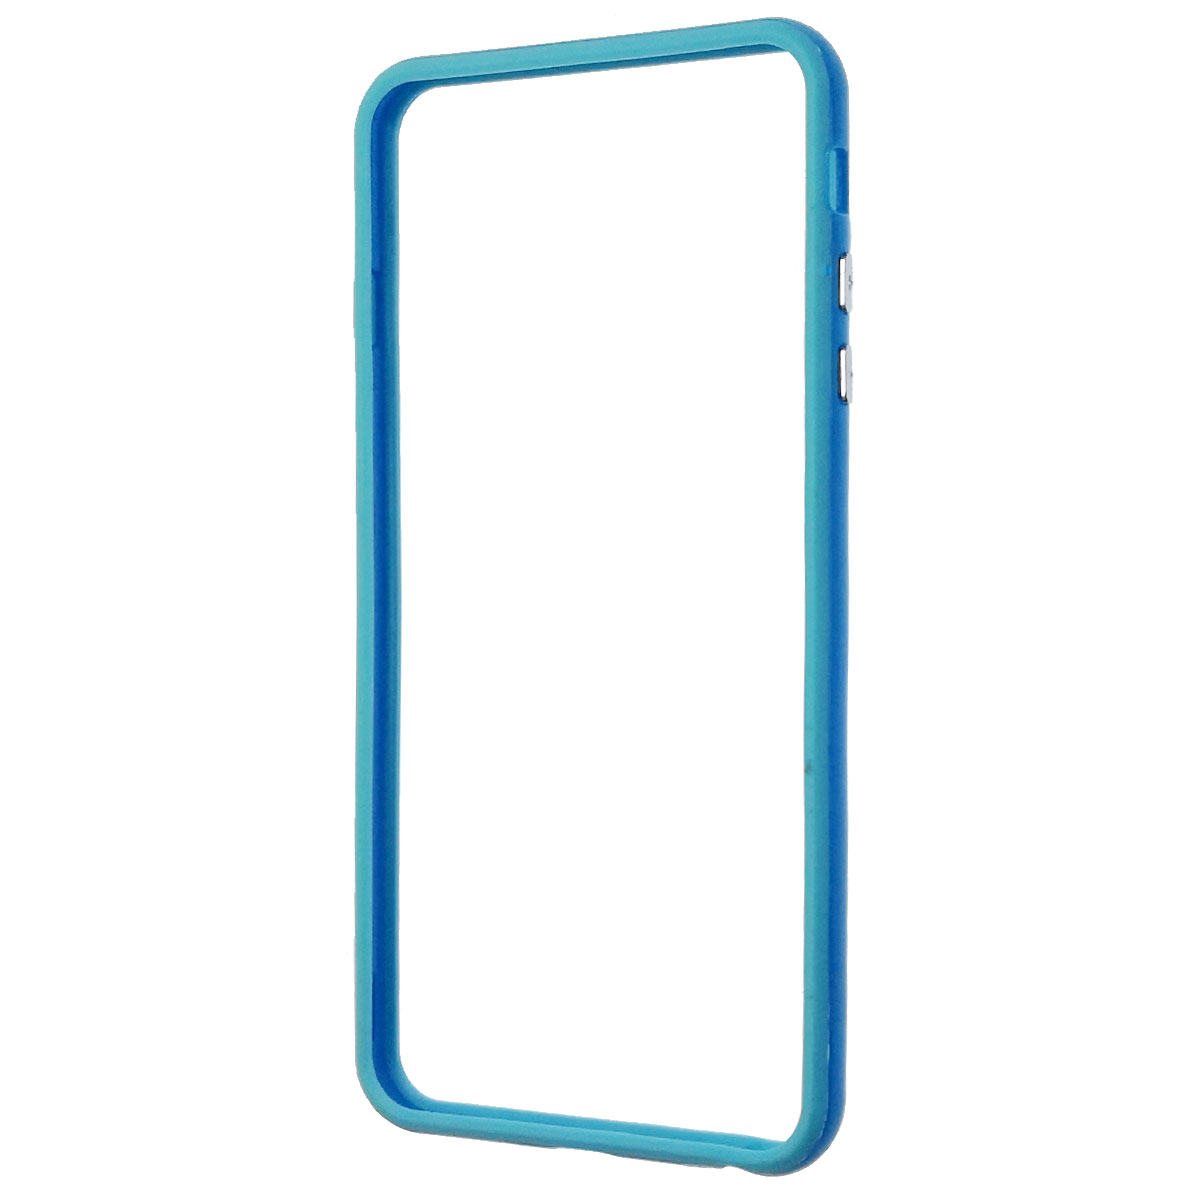 Бампер для APPLE iPhone 6 Plus, iPhone 6S Plus, силикон, пластик, цвет голубой